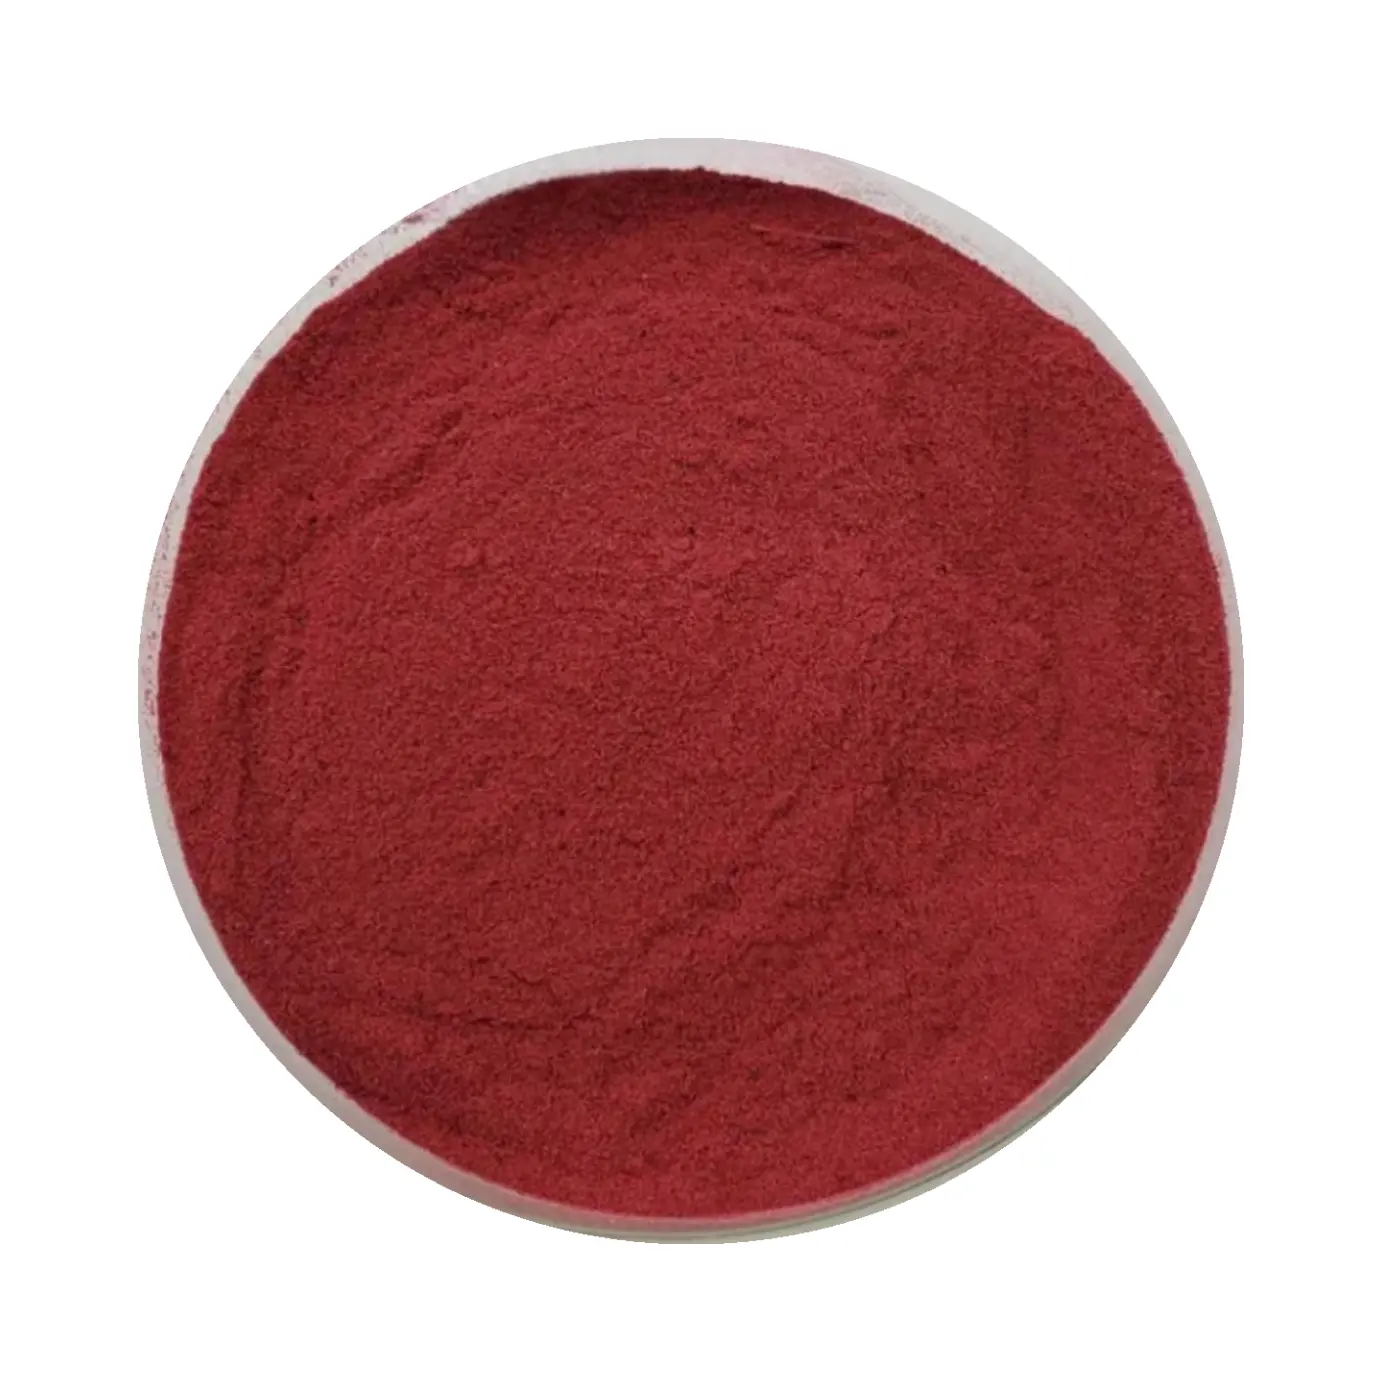 Supply freeze dried 100% natural acai berry powder free sample organic acai berry powder